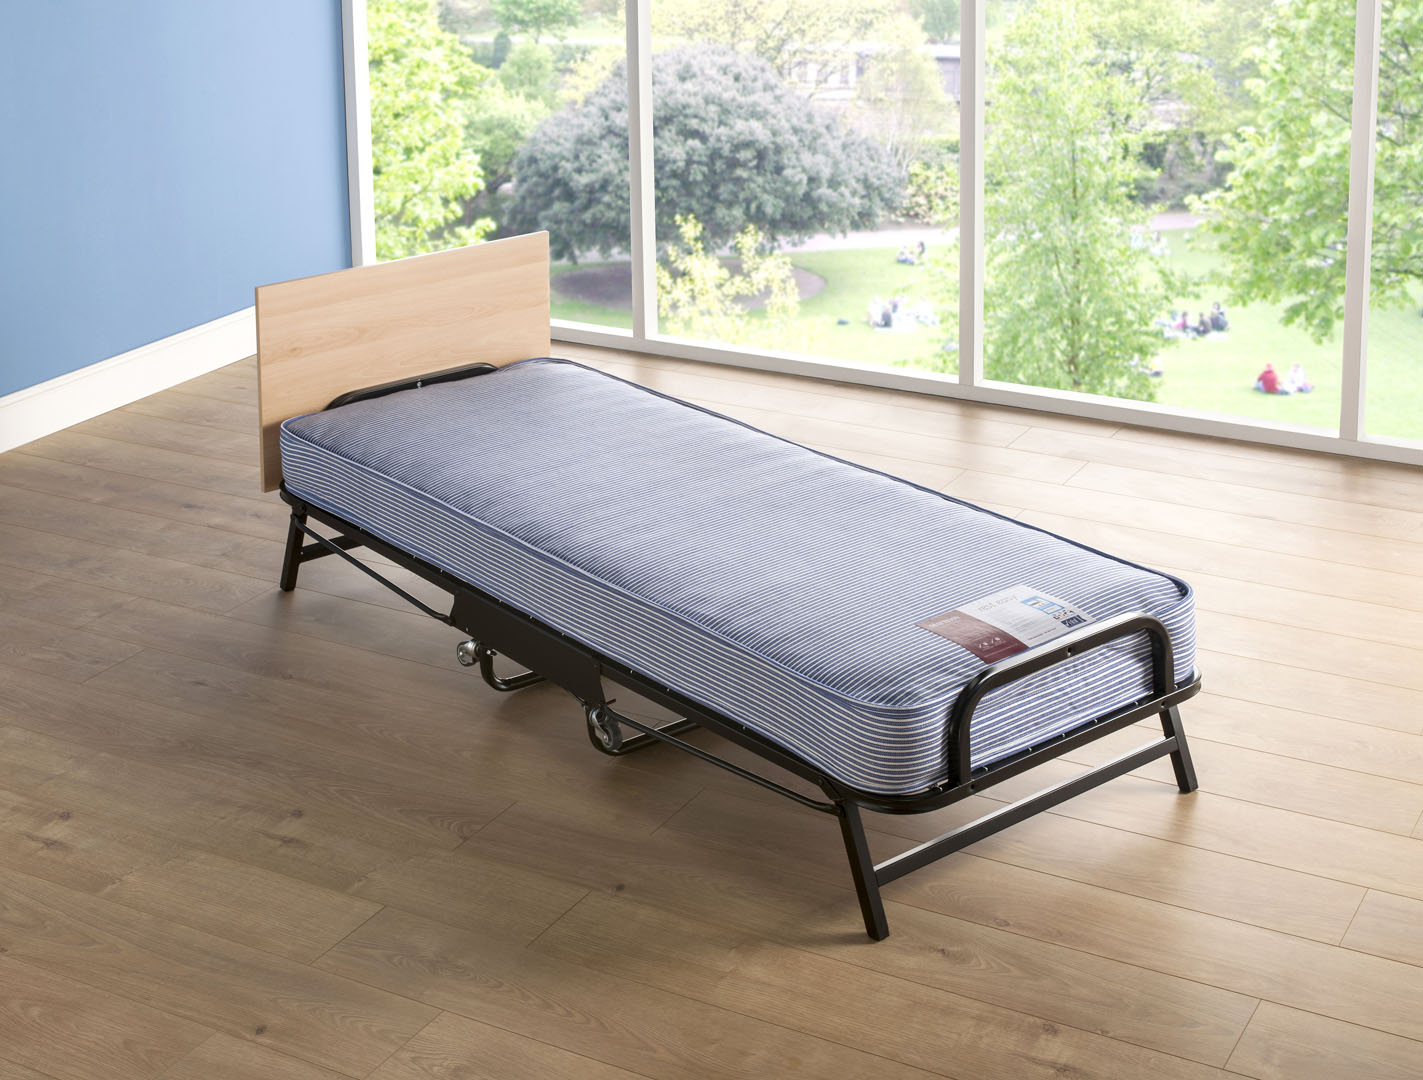 JML12 metal bed frame and mattress